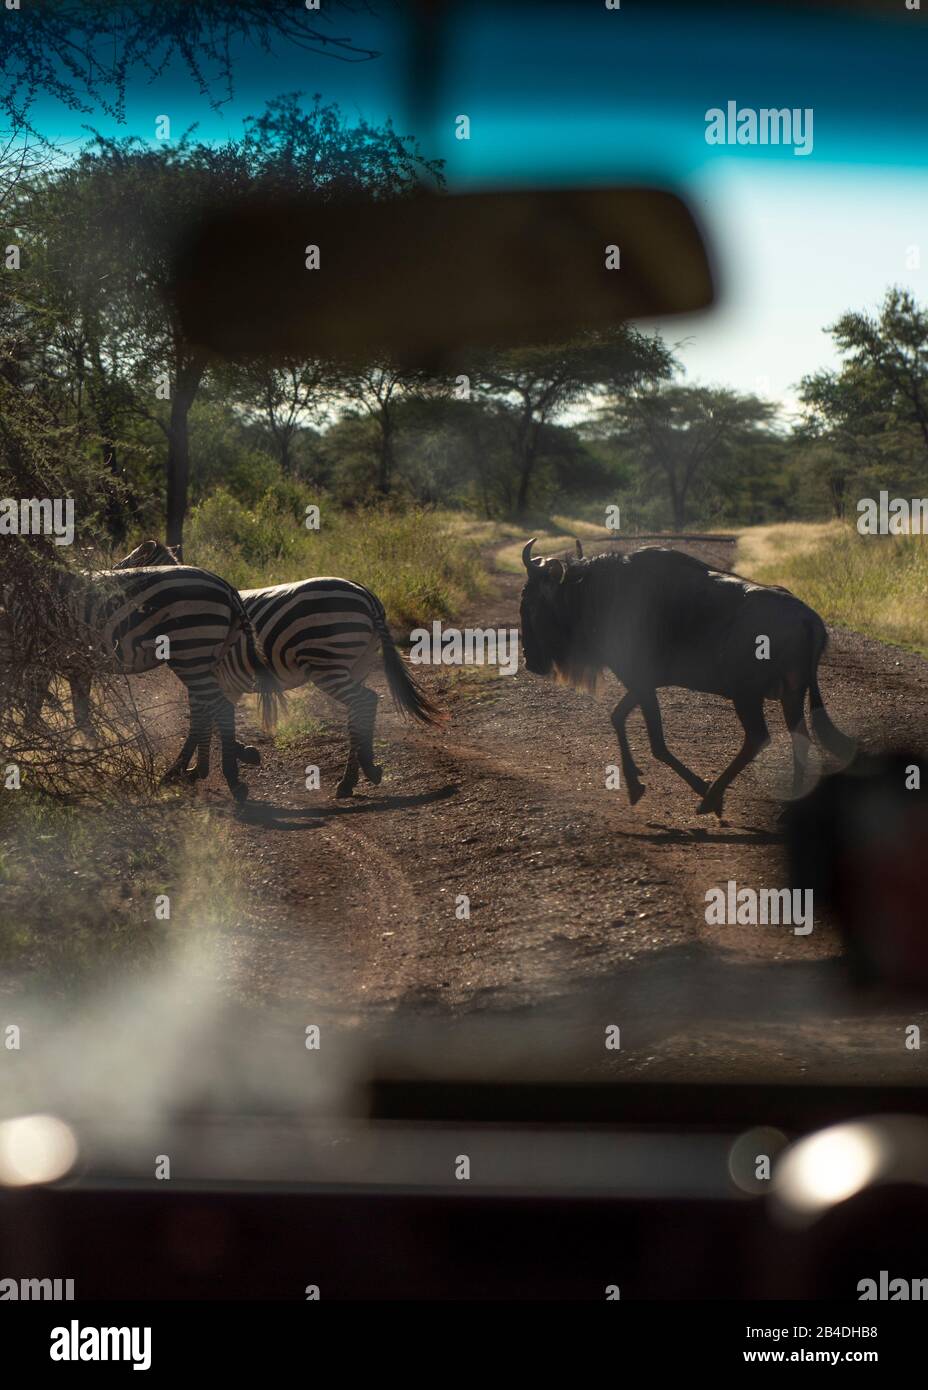 Tanzania, Northern Tanzania, Serengeti National Park, Ngorongoro Crater, Tarangire, Arusha and Lake Manyara, zebras and gnu cross the road Stock Photo